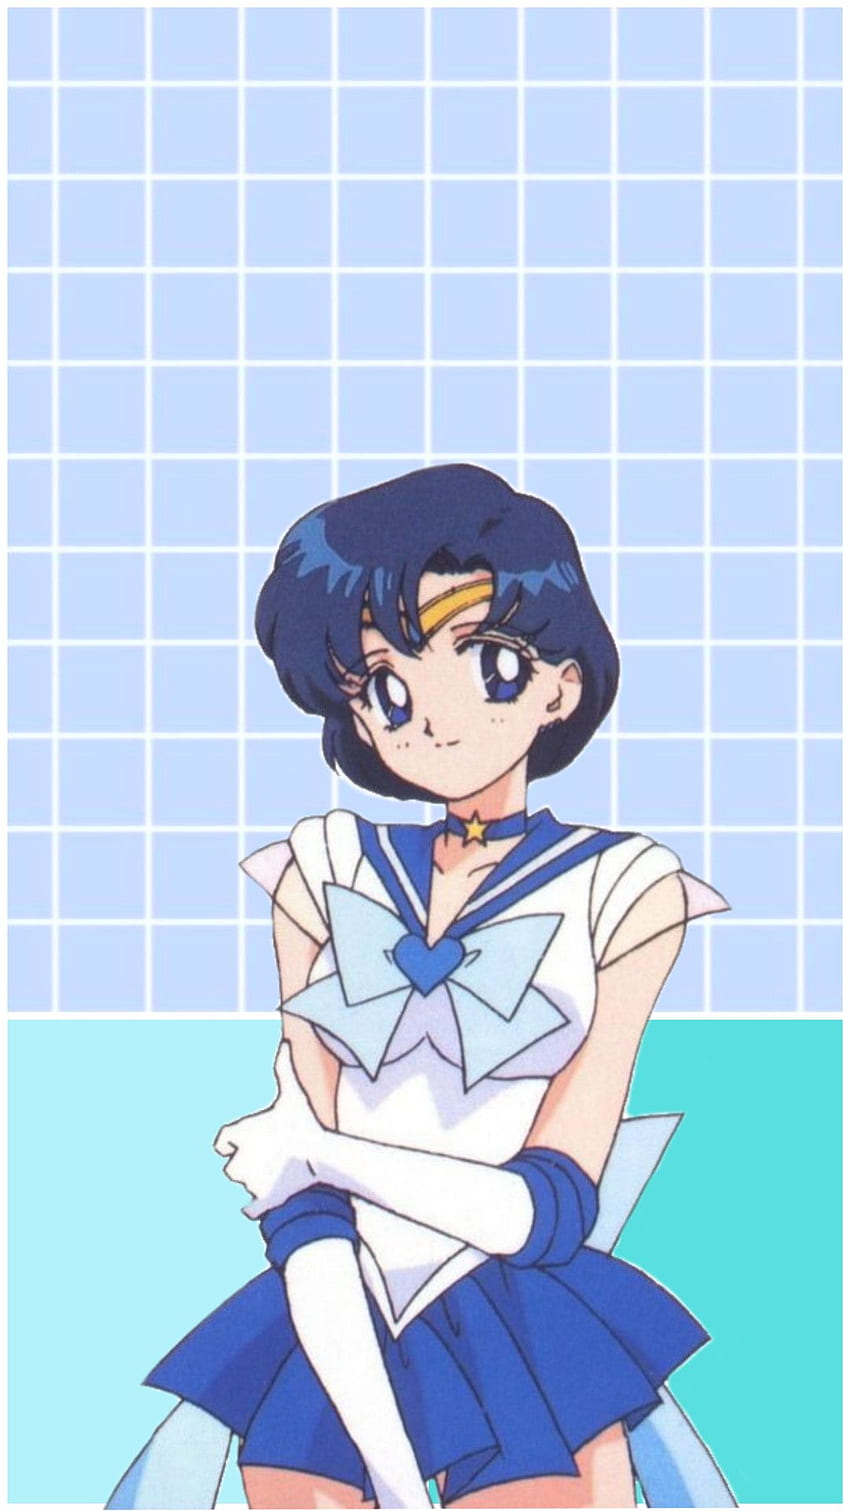 Sailor Mercury - Sailor Mercury Wallpaper (28078103) - Fanpop